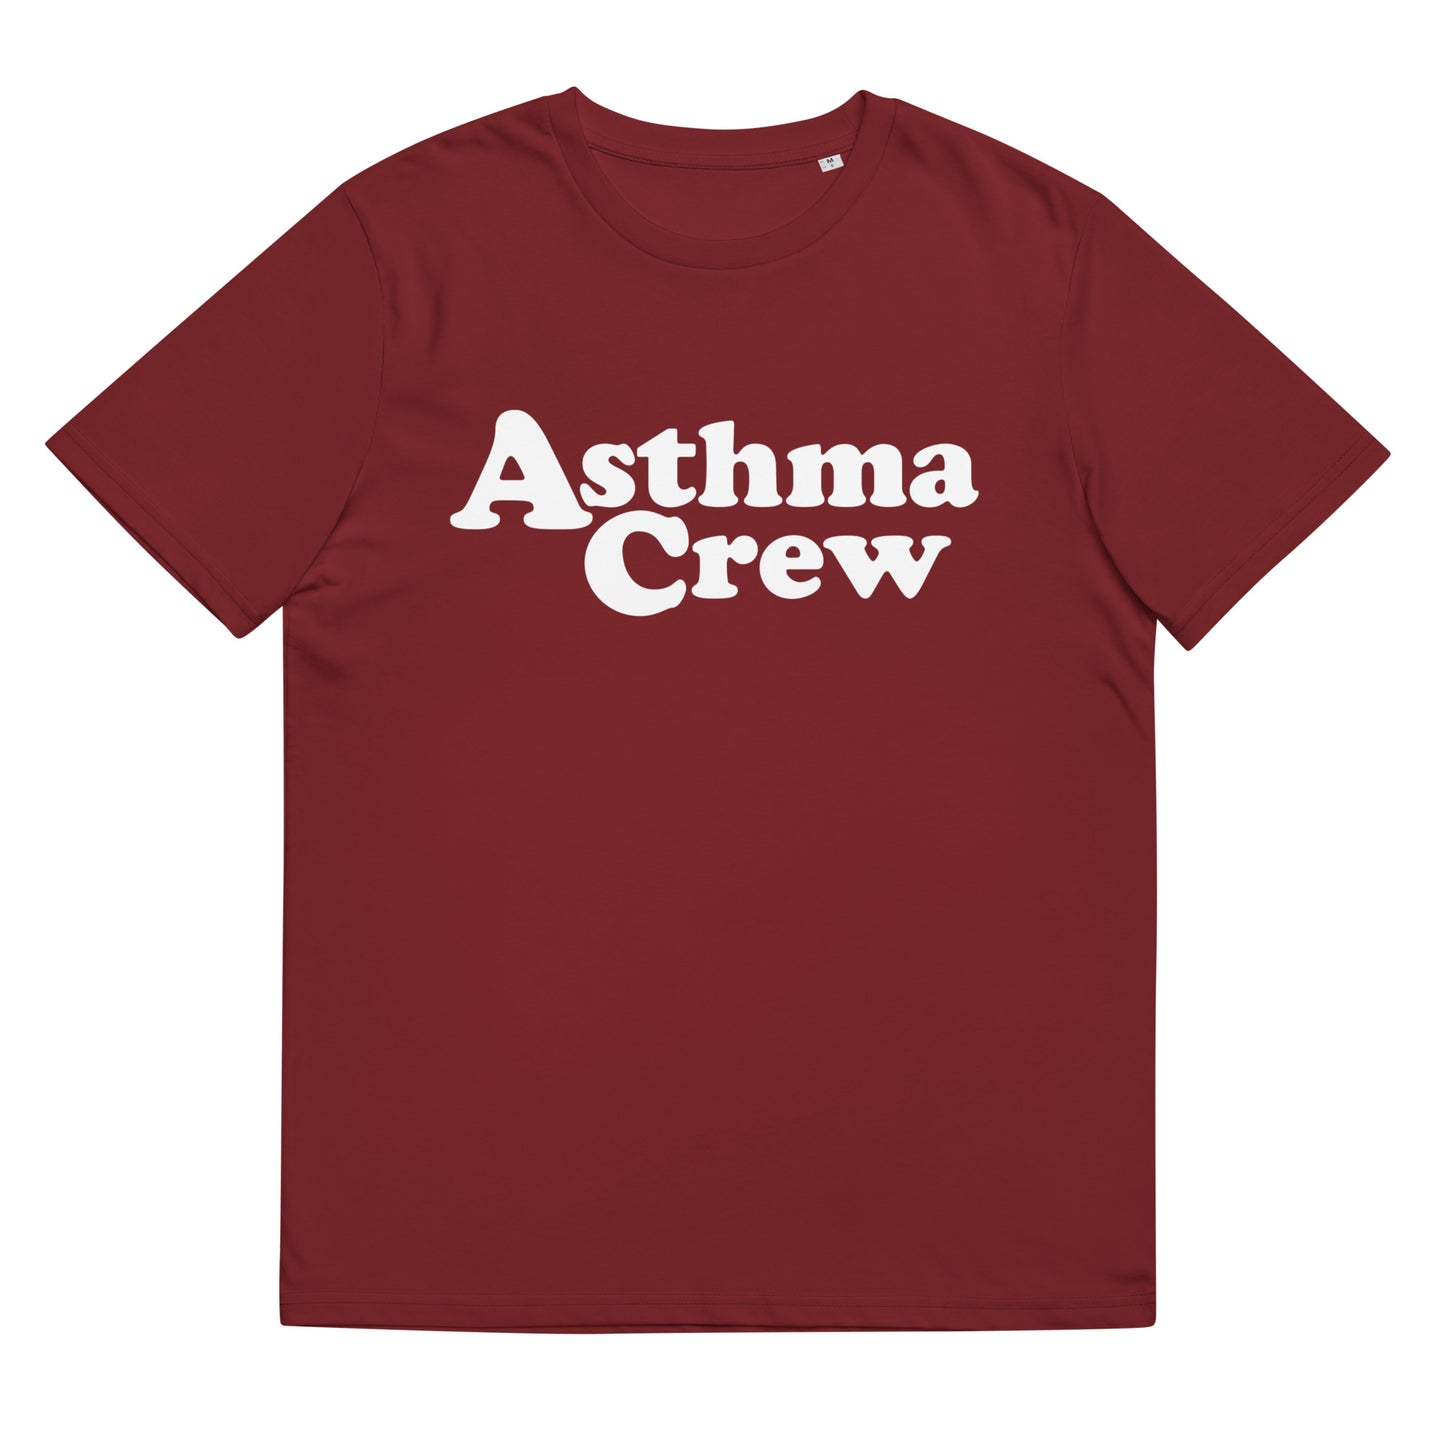 Asthma Crew - Tee